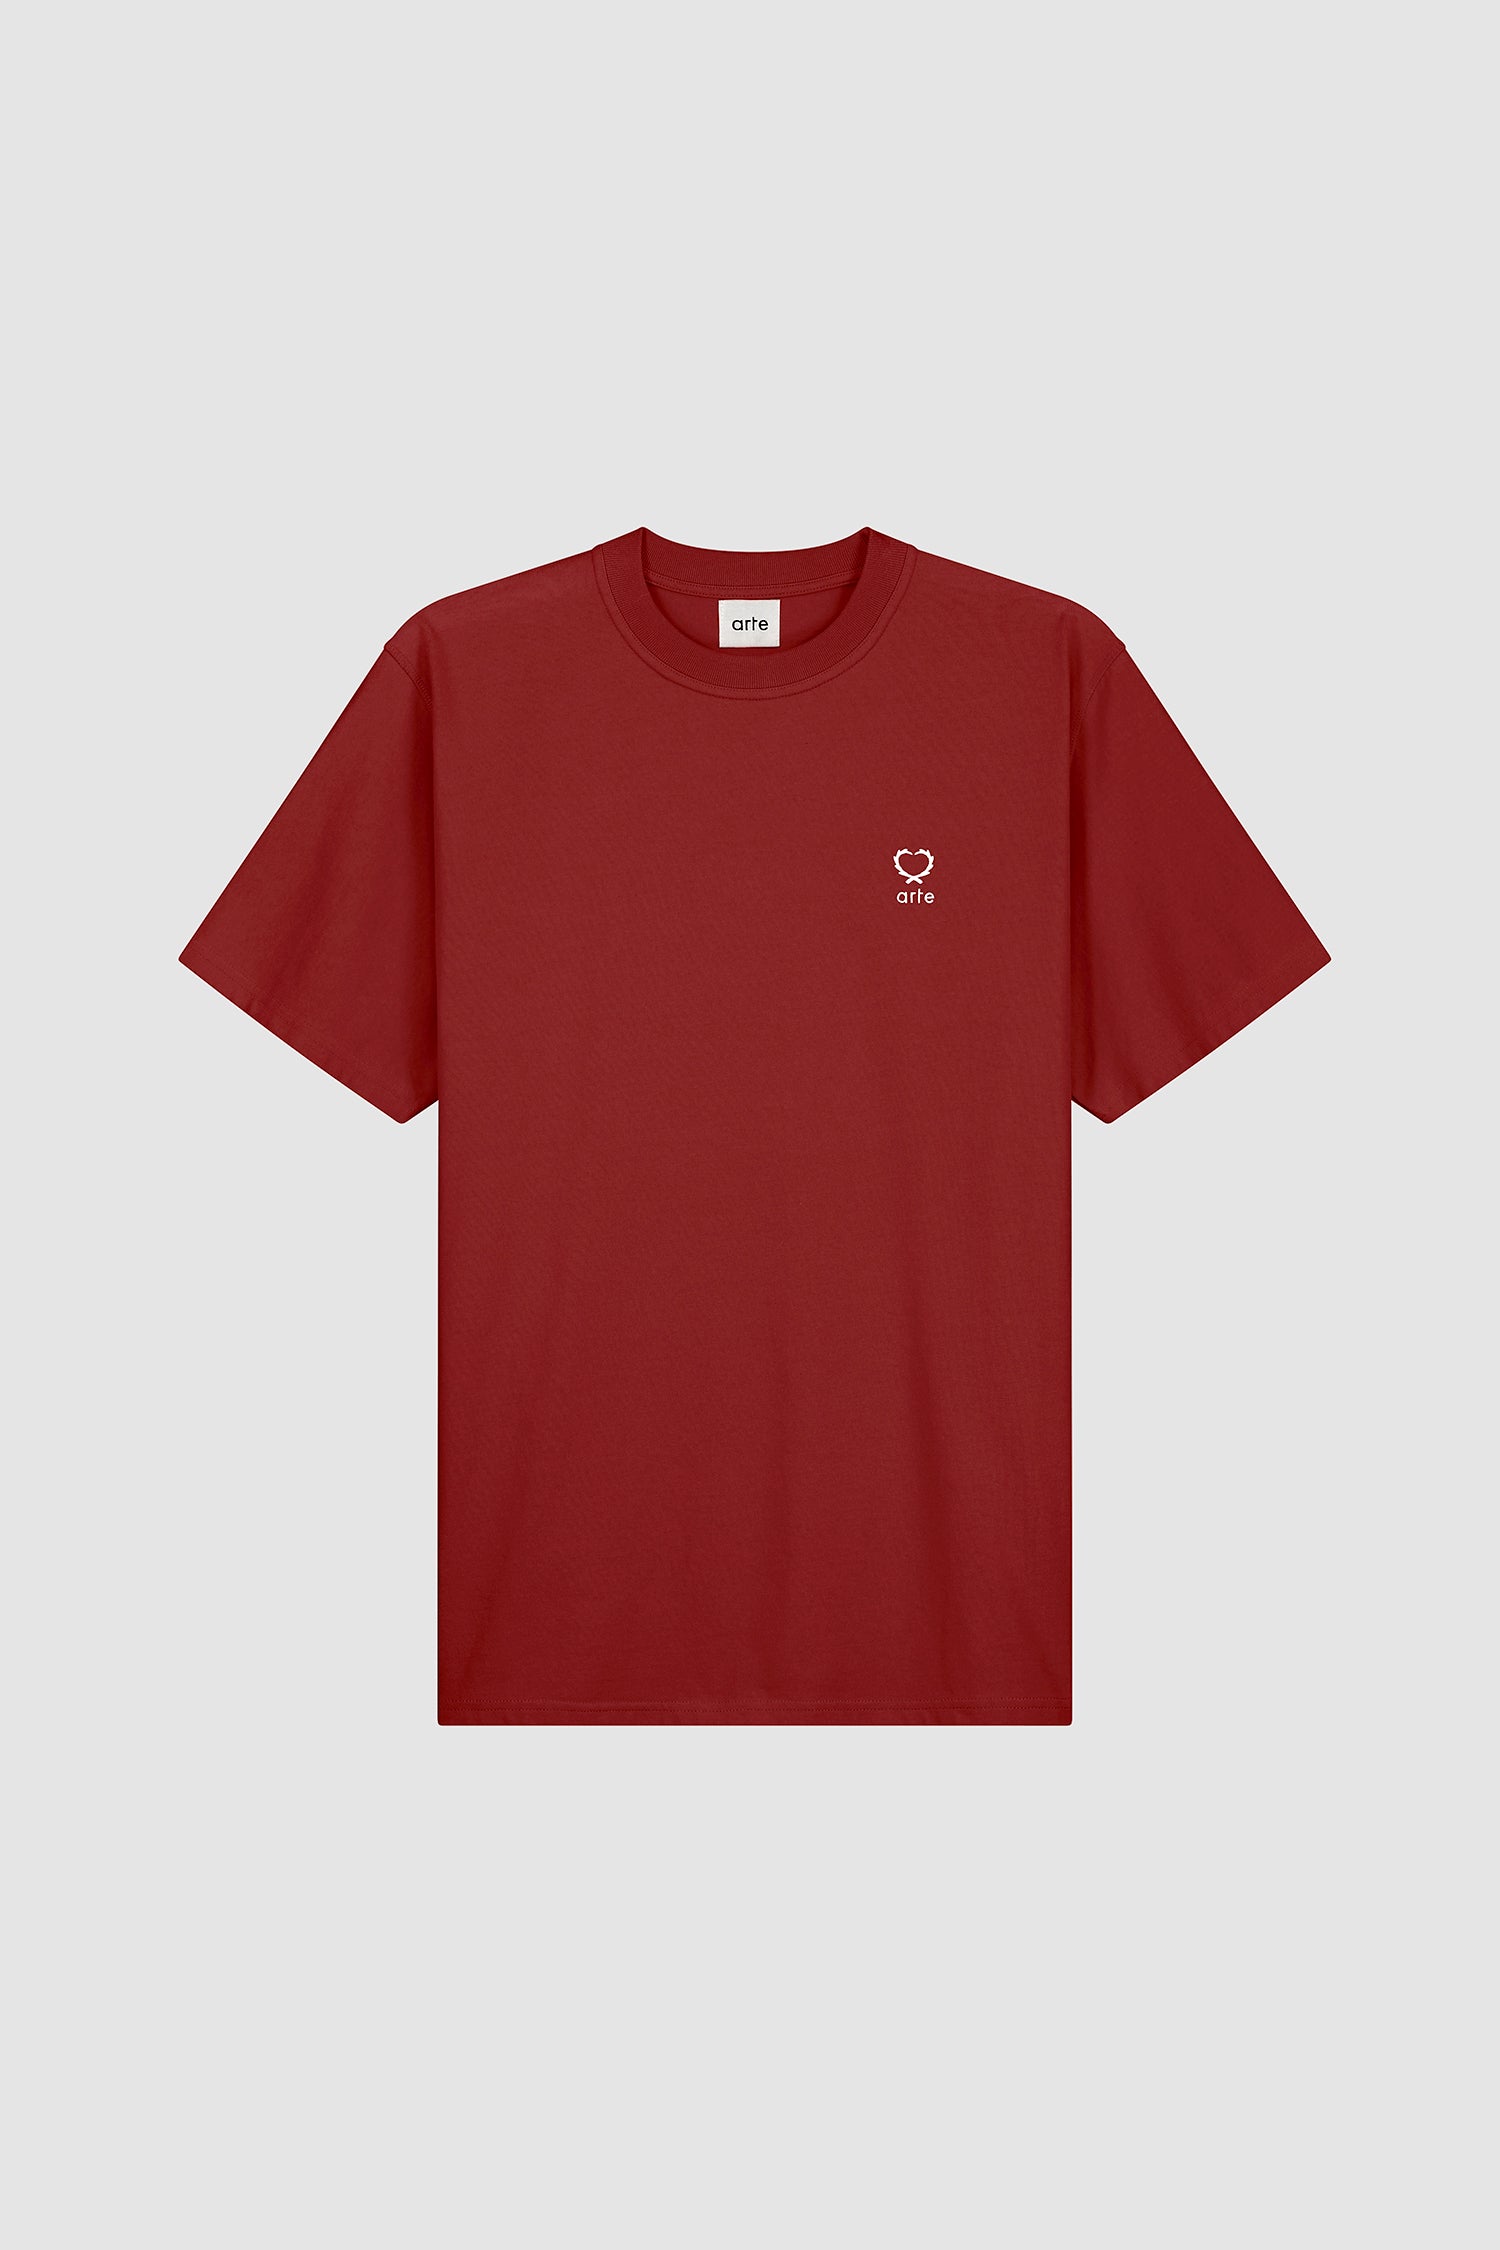 Teo Small Heart T-shirt - Bordeaux